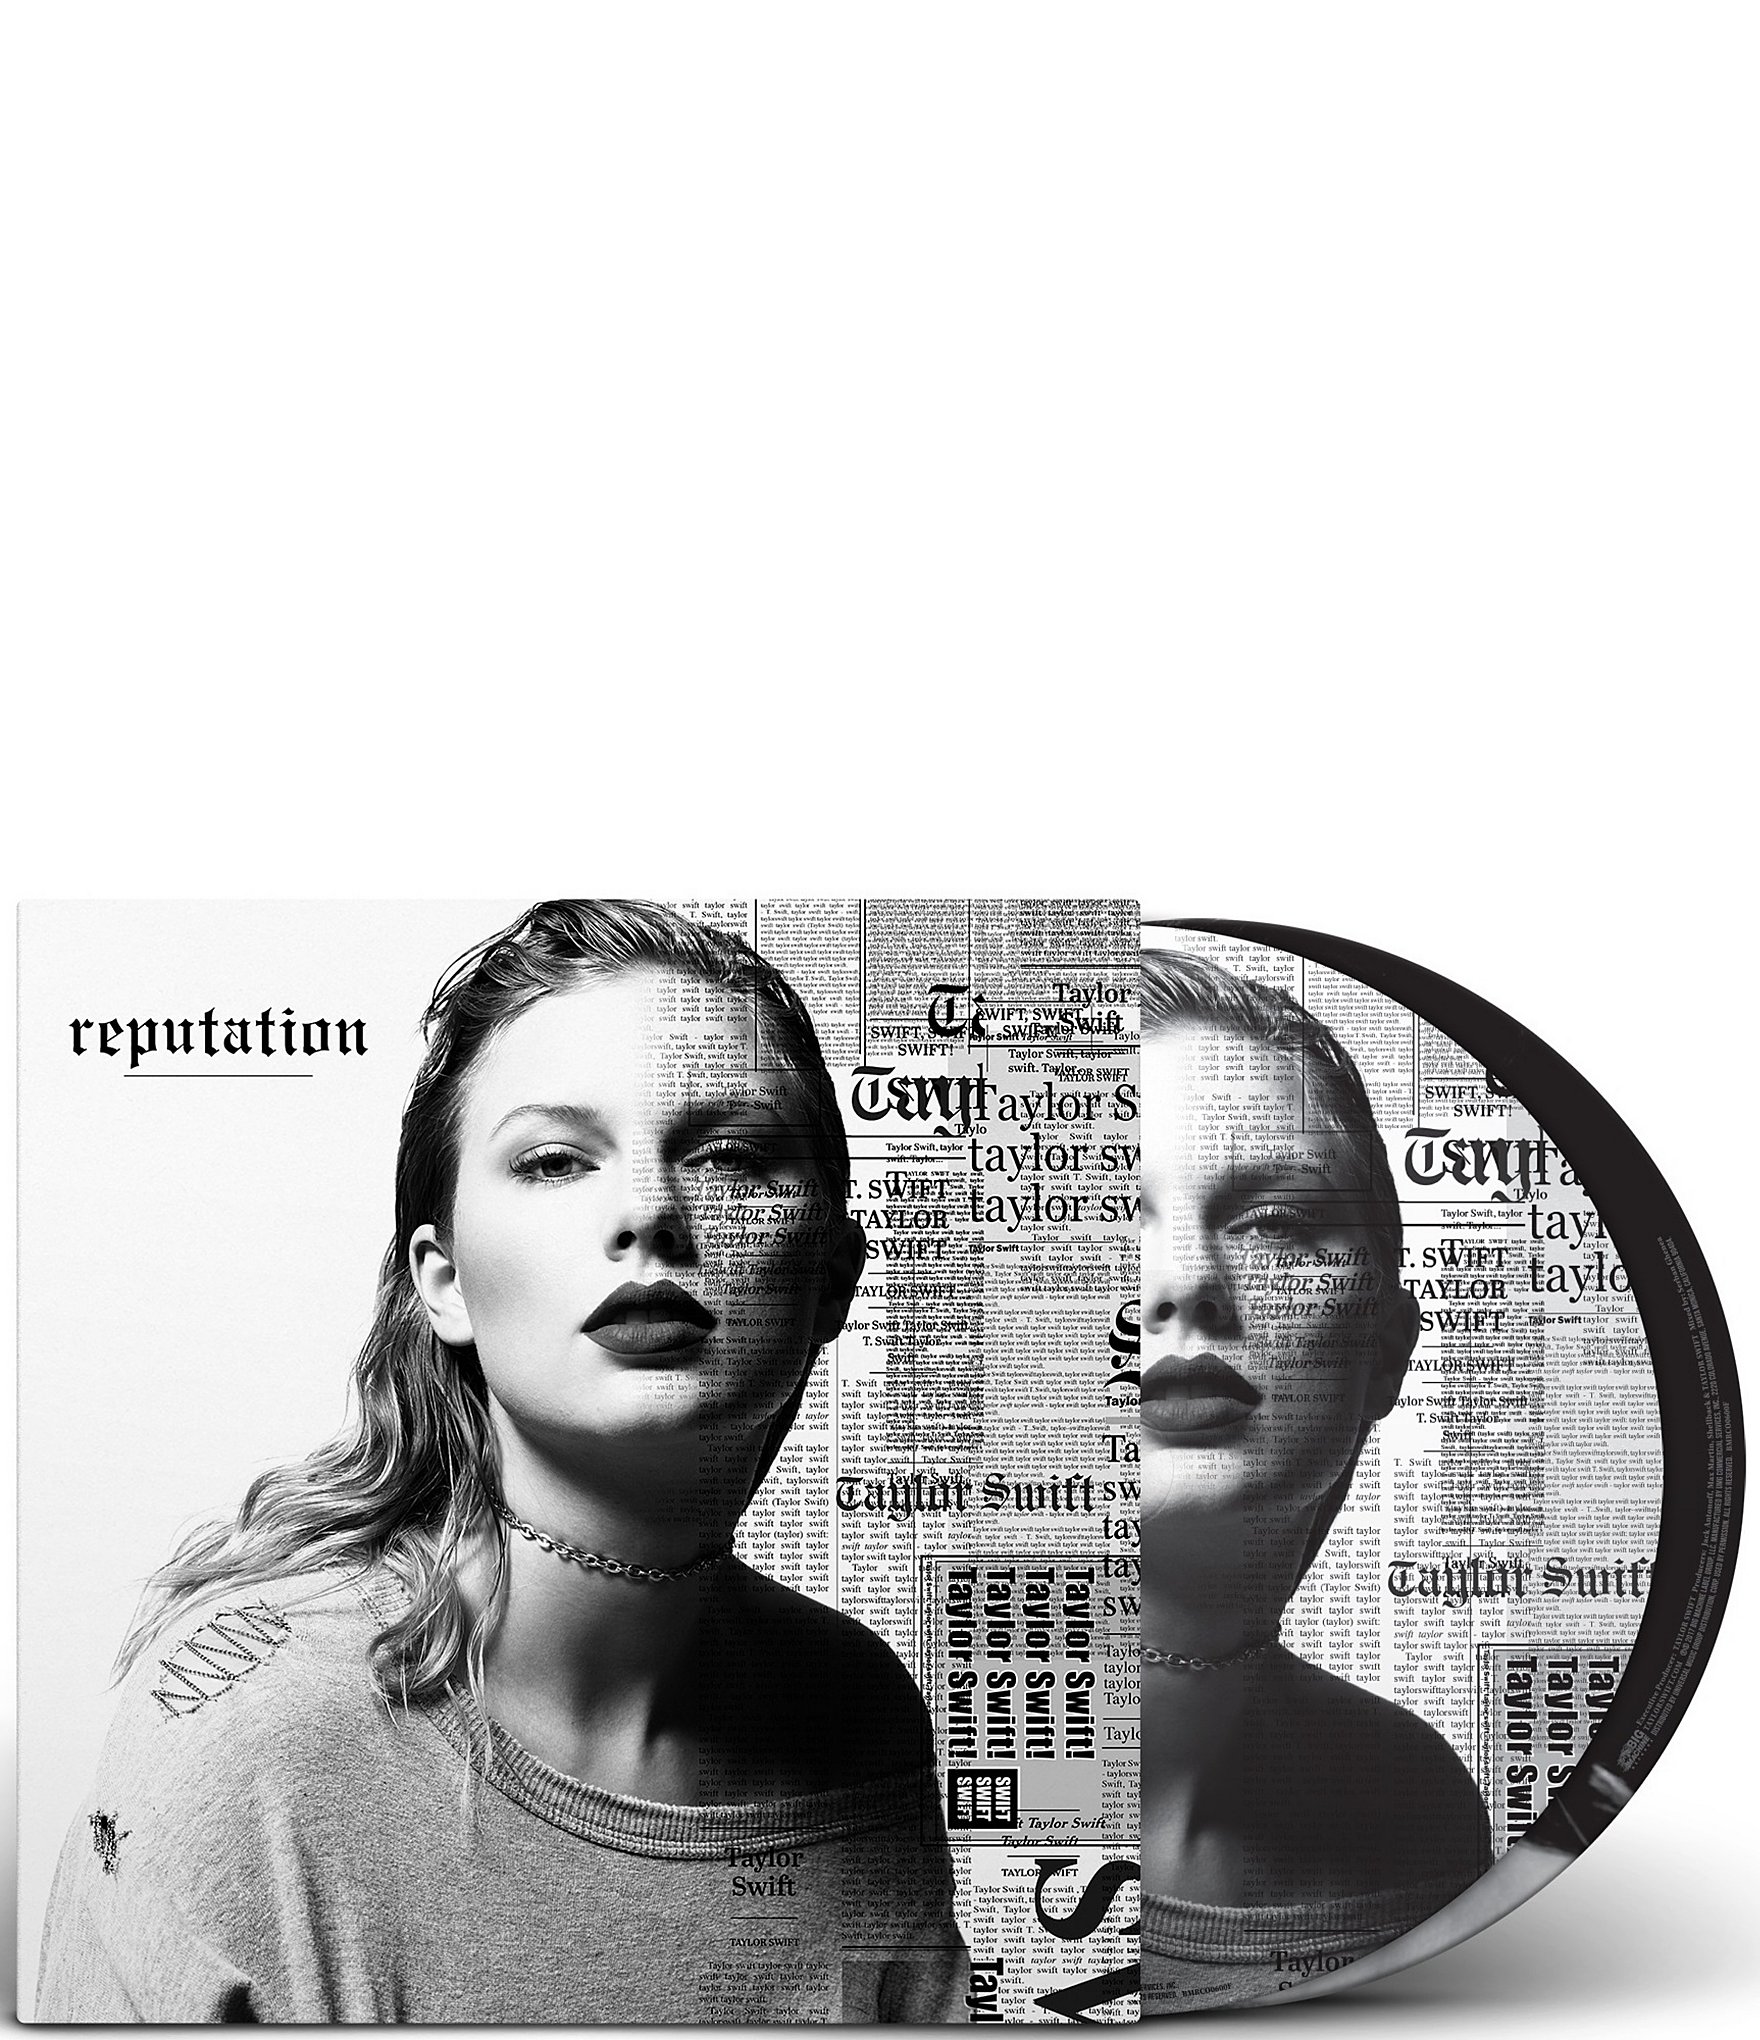 Taylor Swift - Reputation CD – Viniel